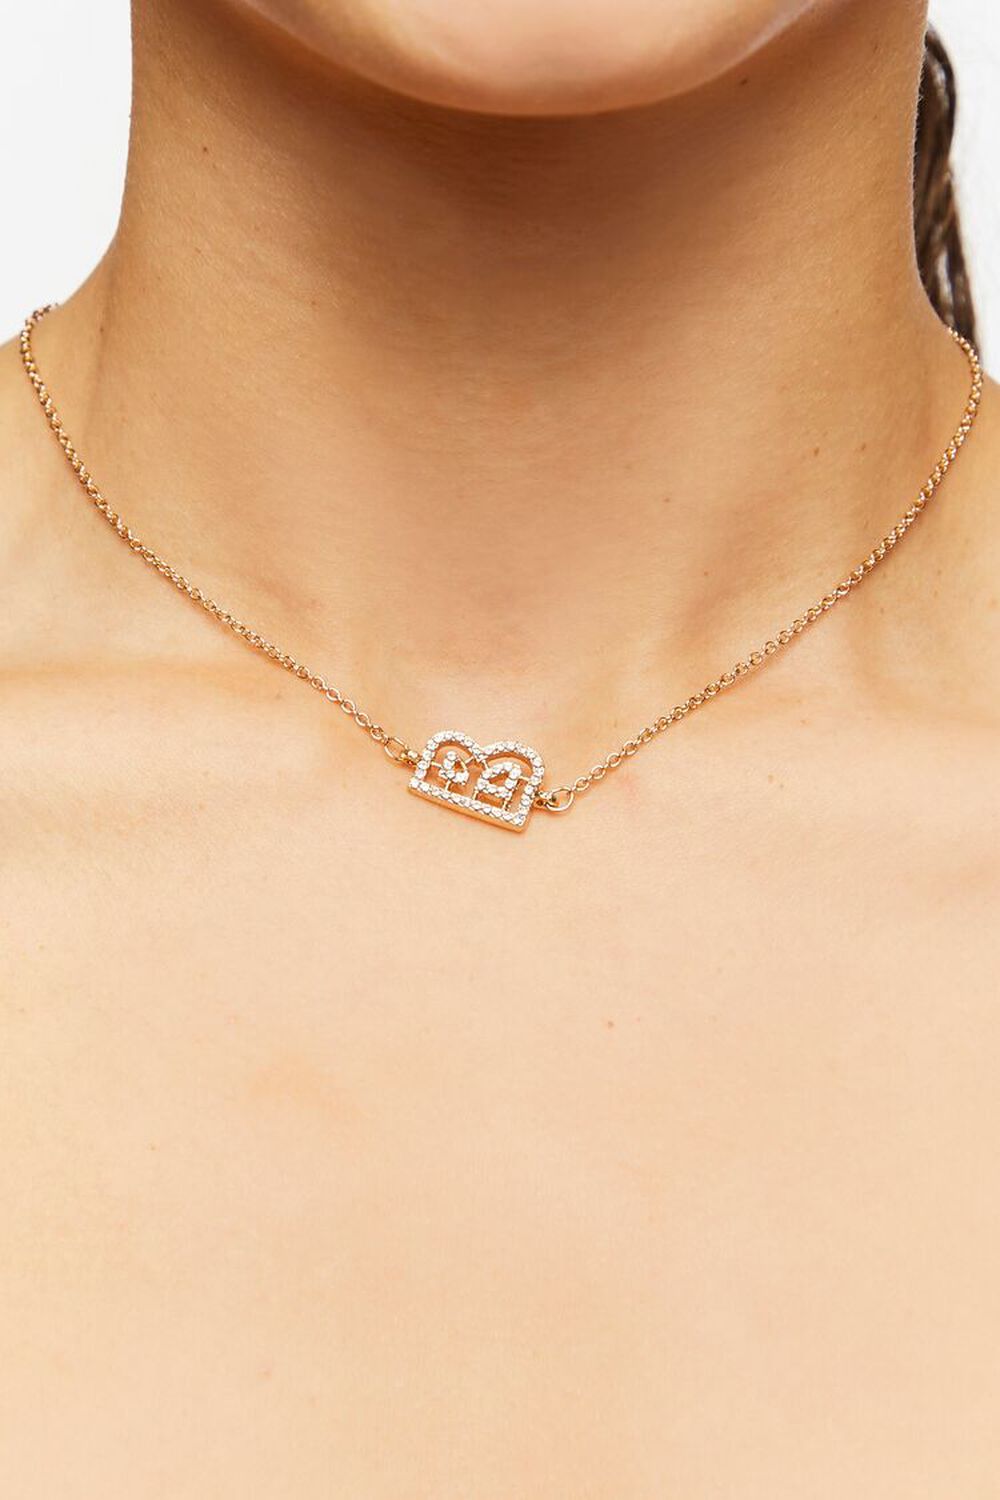 GOLD/B Rhinestone Initial Pendant Necklace, image 1